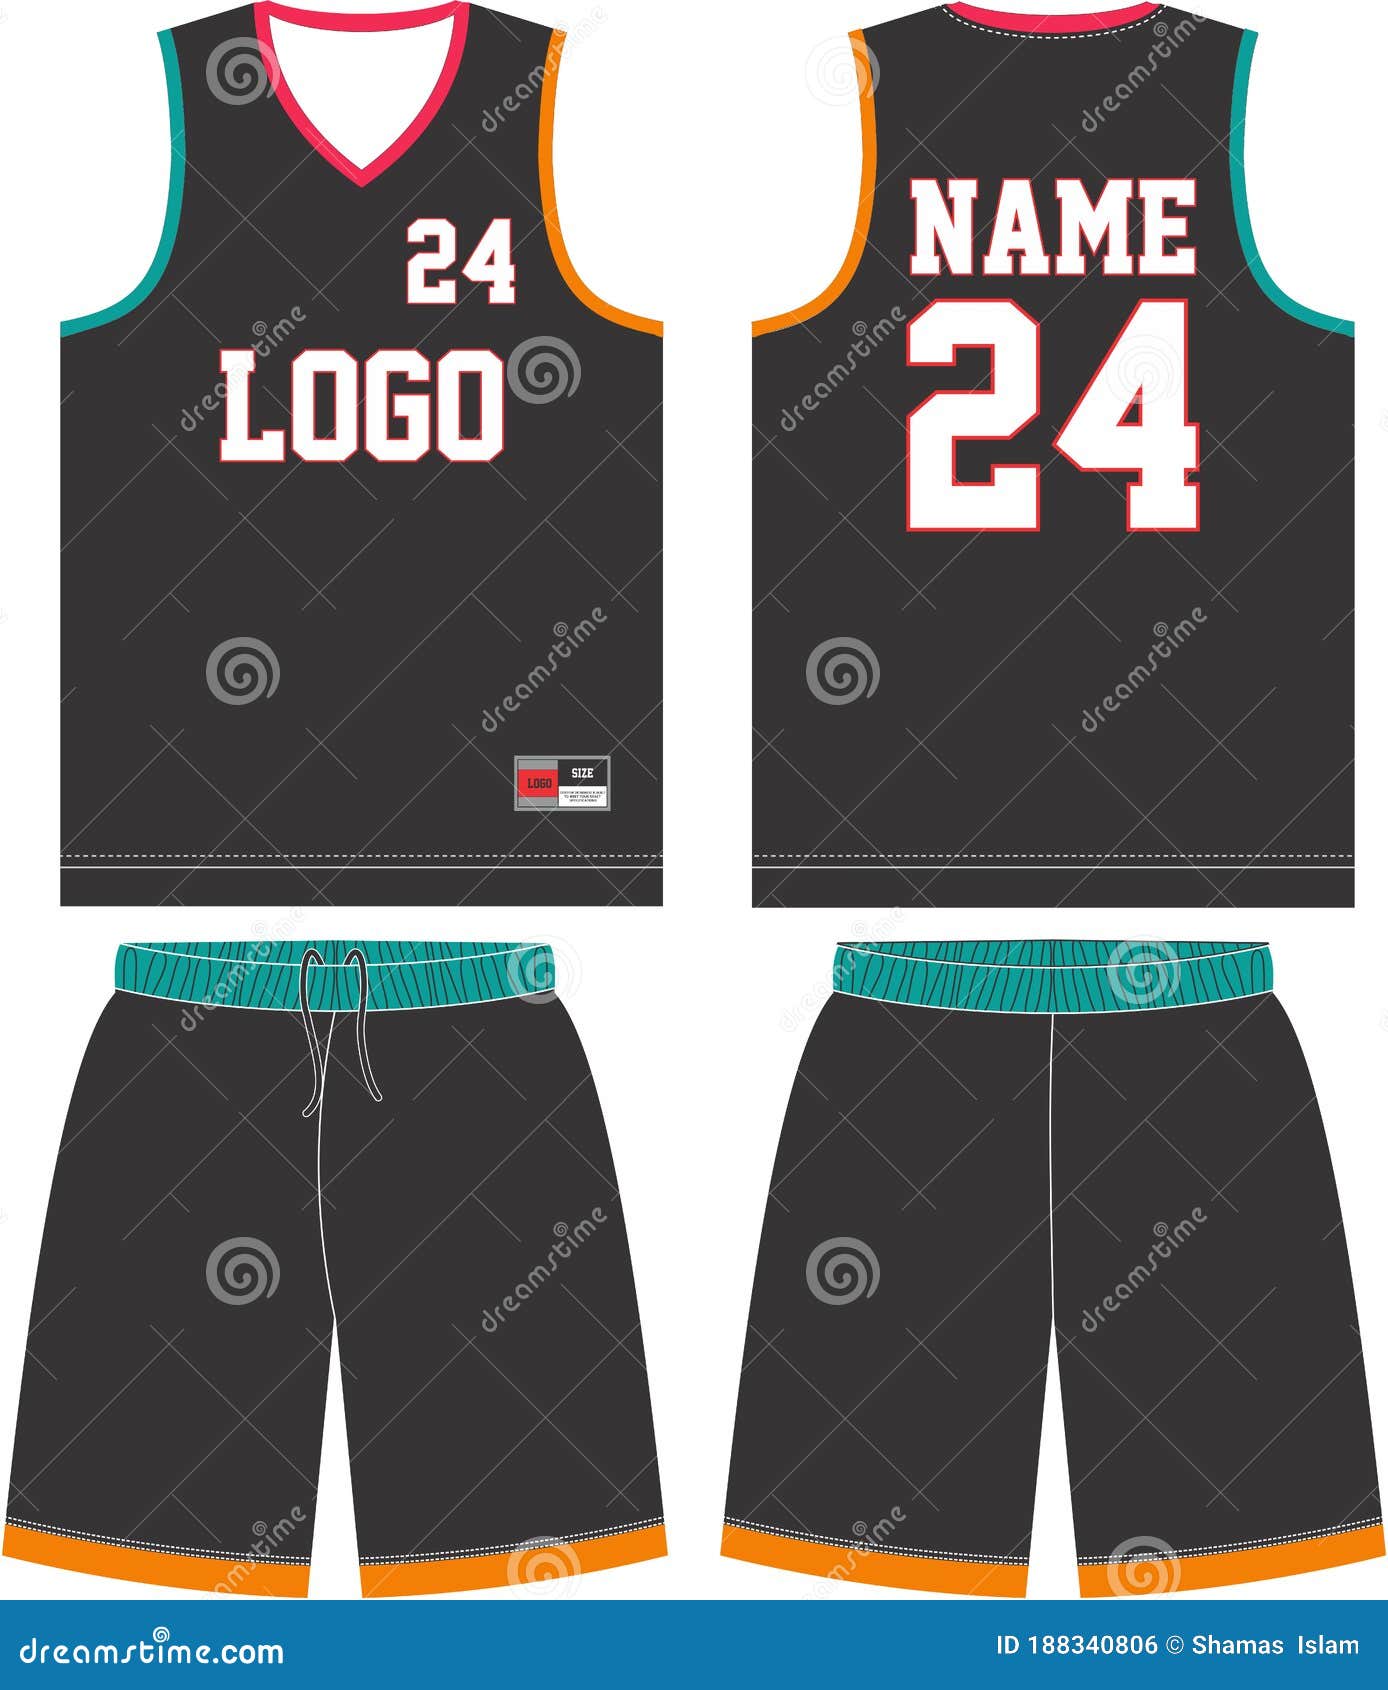 Basketball Uniform Mockup Template Design for Basketball Club ...